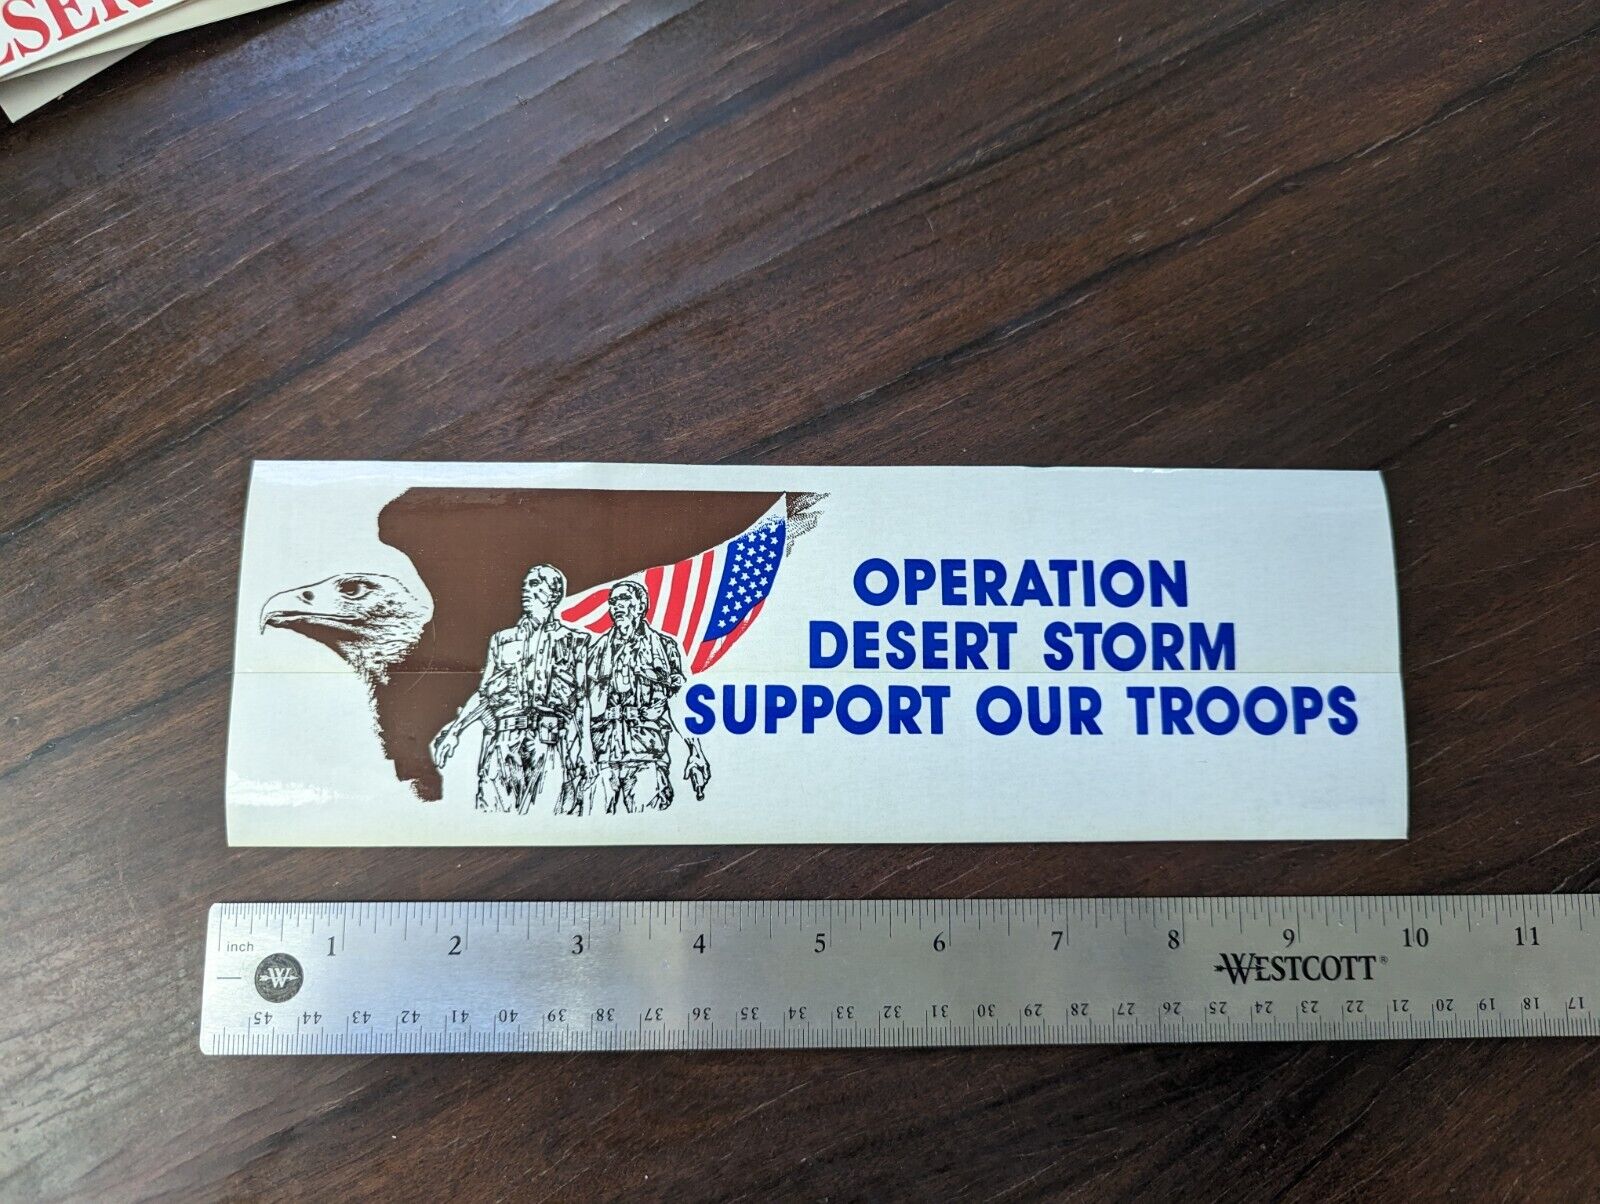 1990 Operation Desert Storm Vintage Bumper Sticker